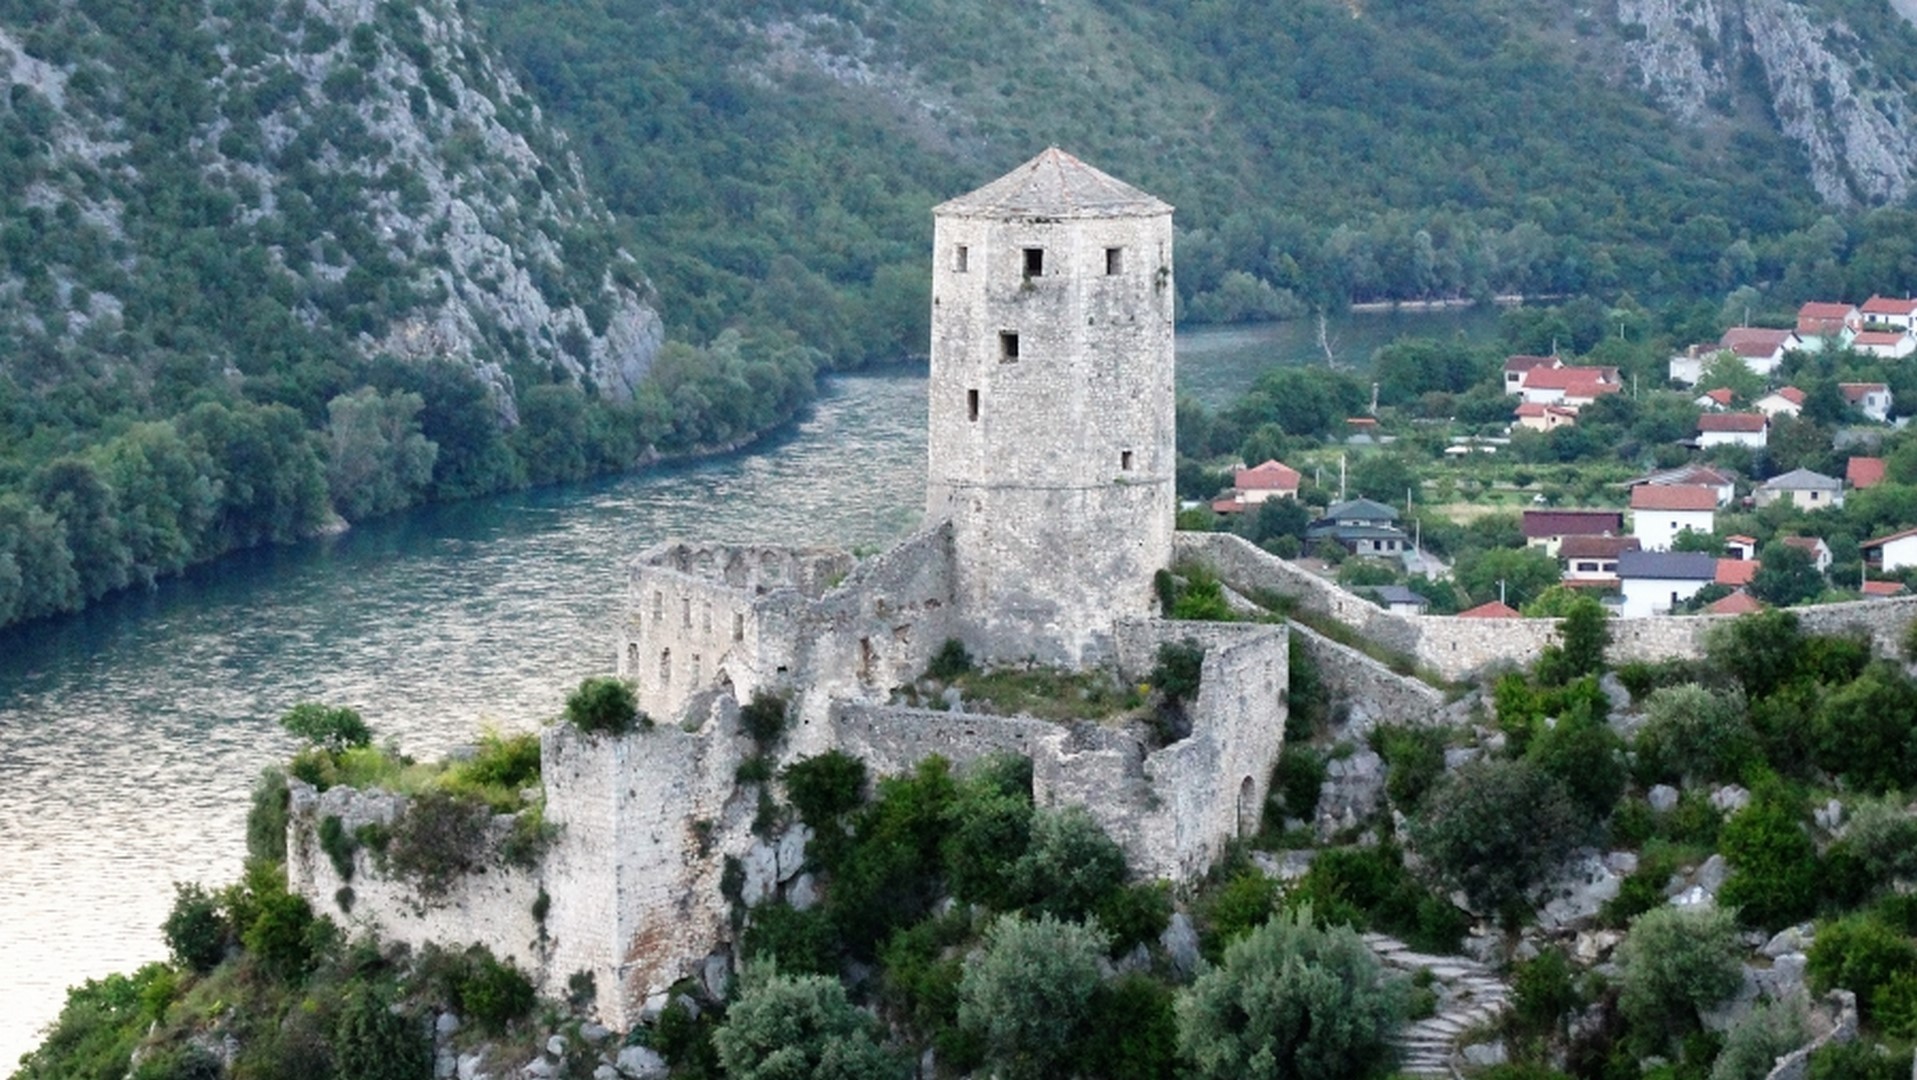 Bosnie-Herzégovine